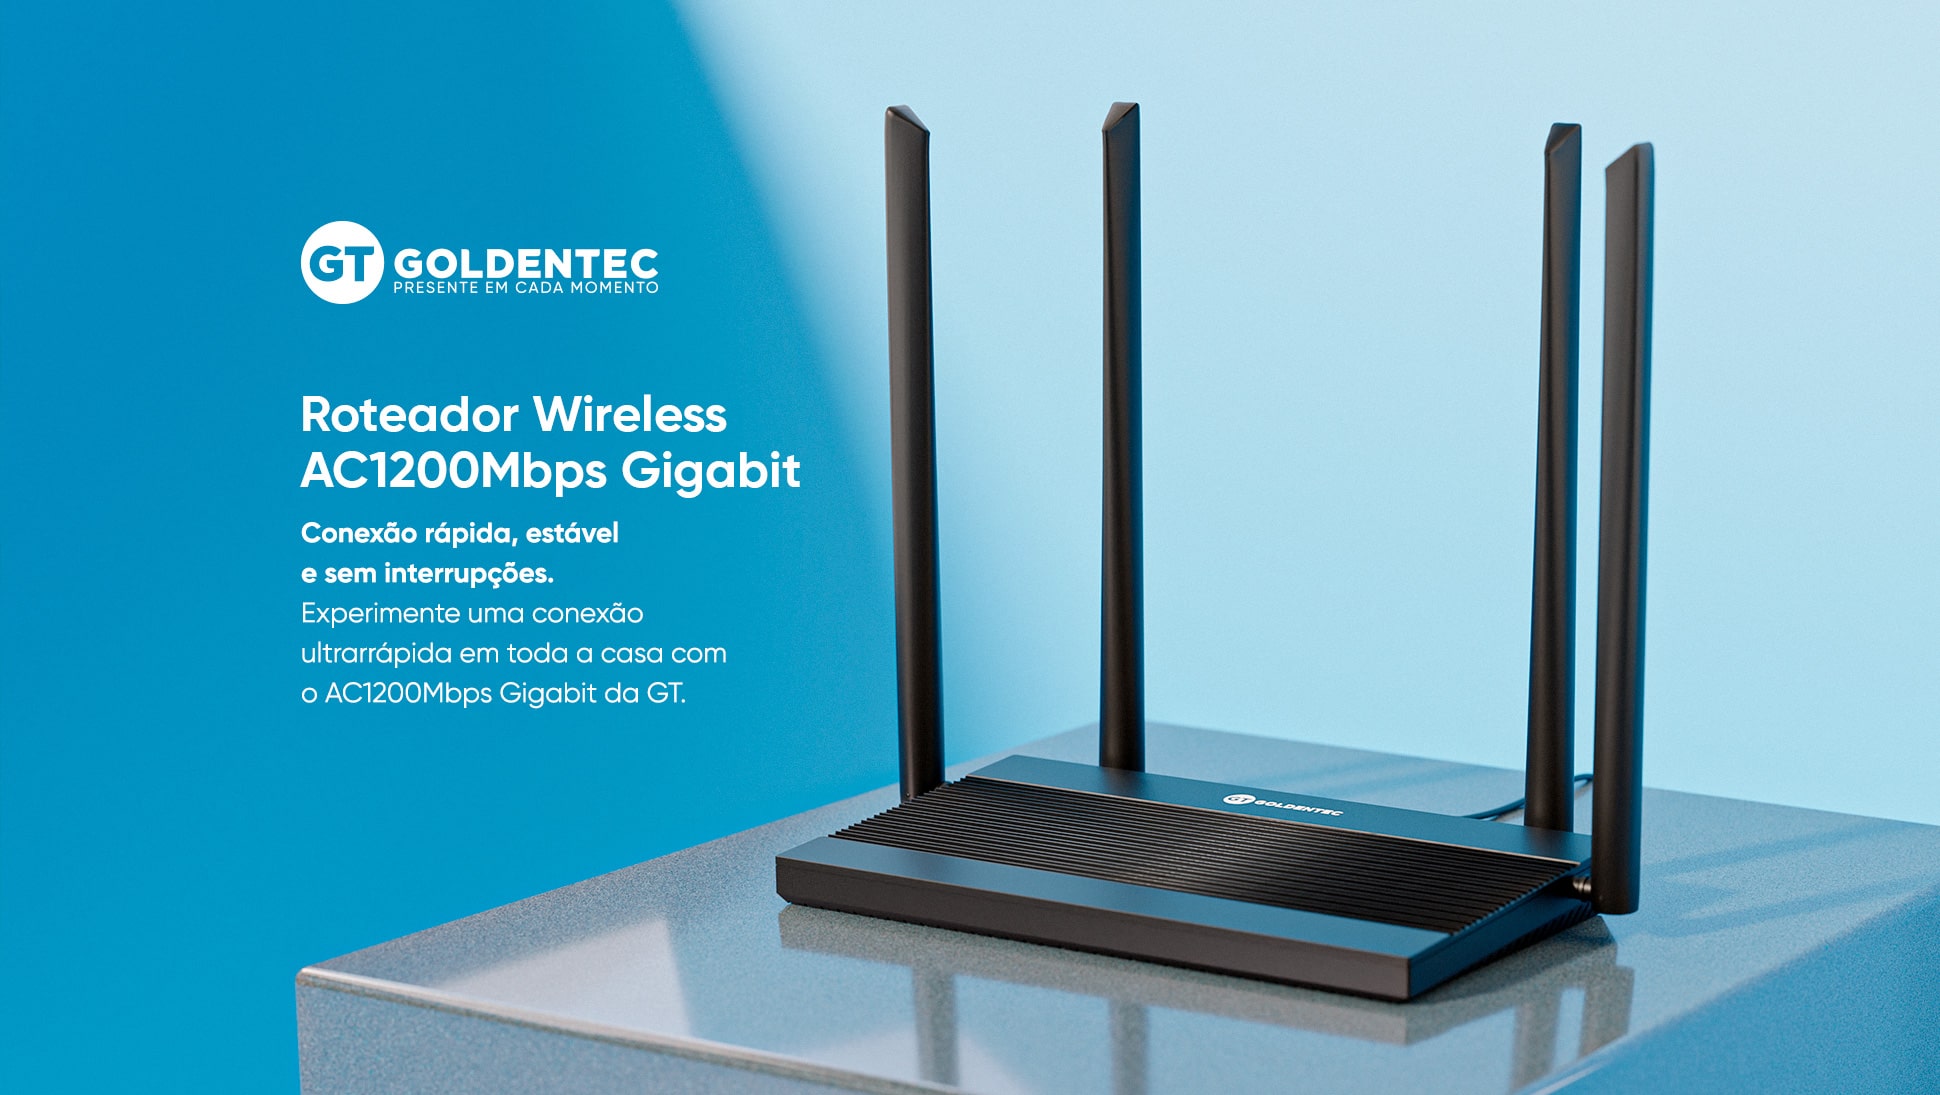 Roteador Wireless AC1200 Goldentec | GT